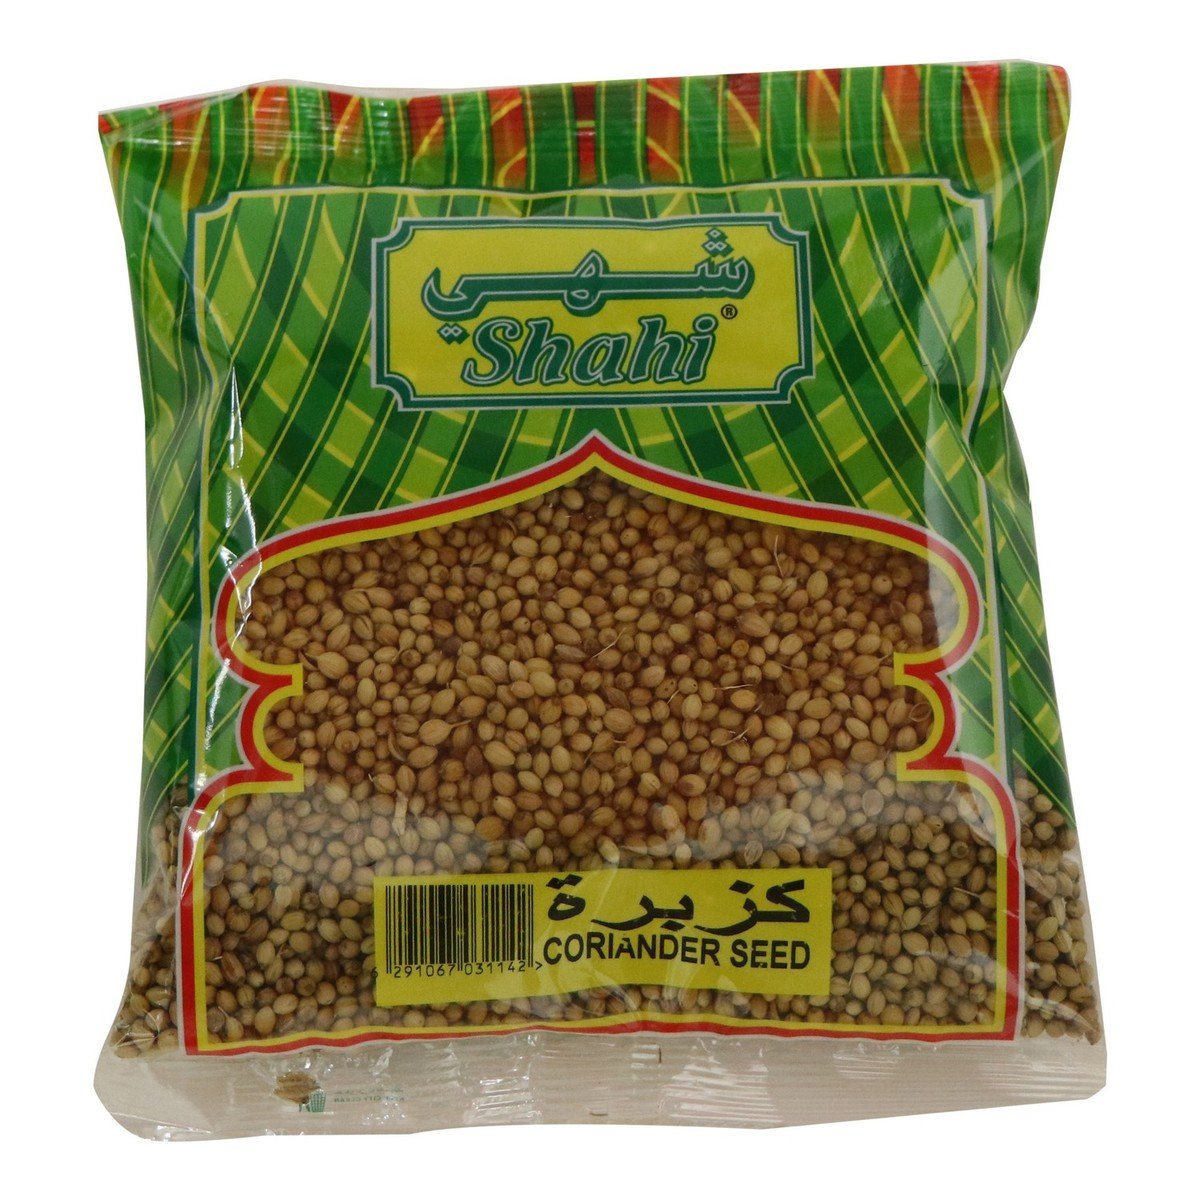 Shahi Coriander Seed 200g